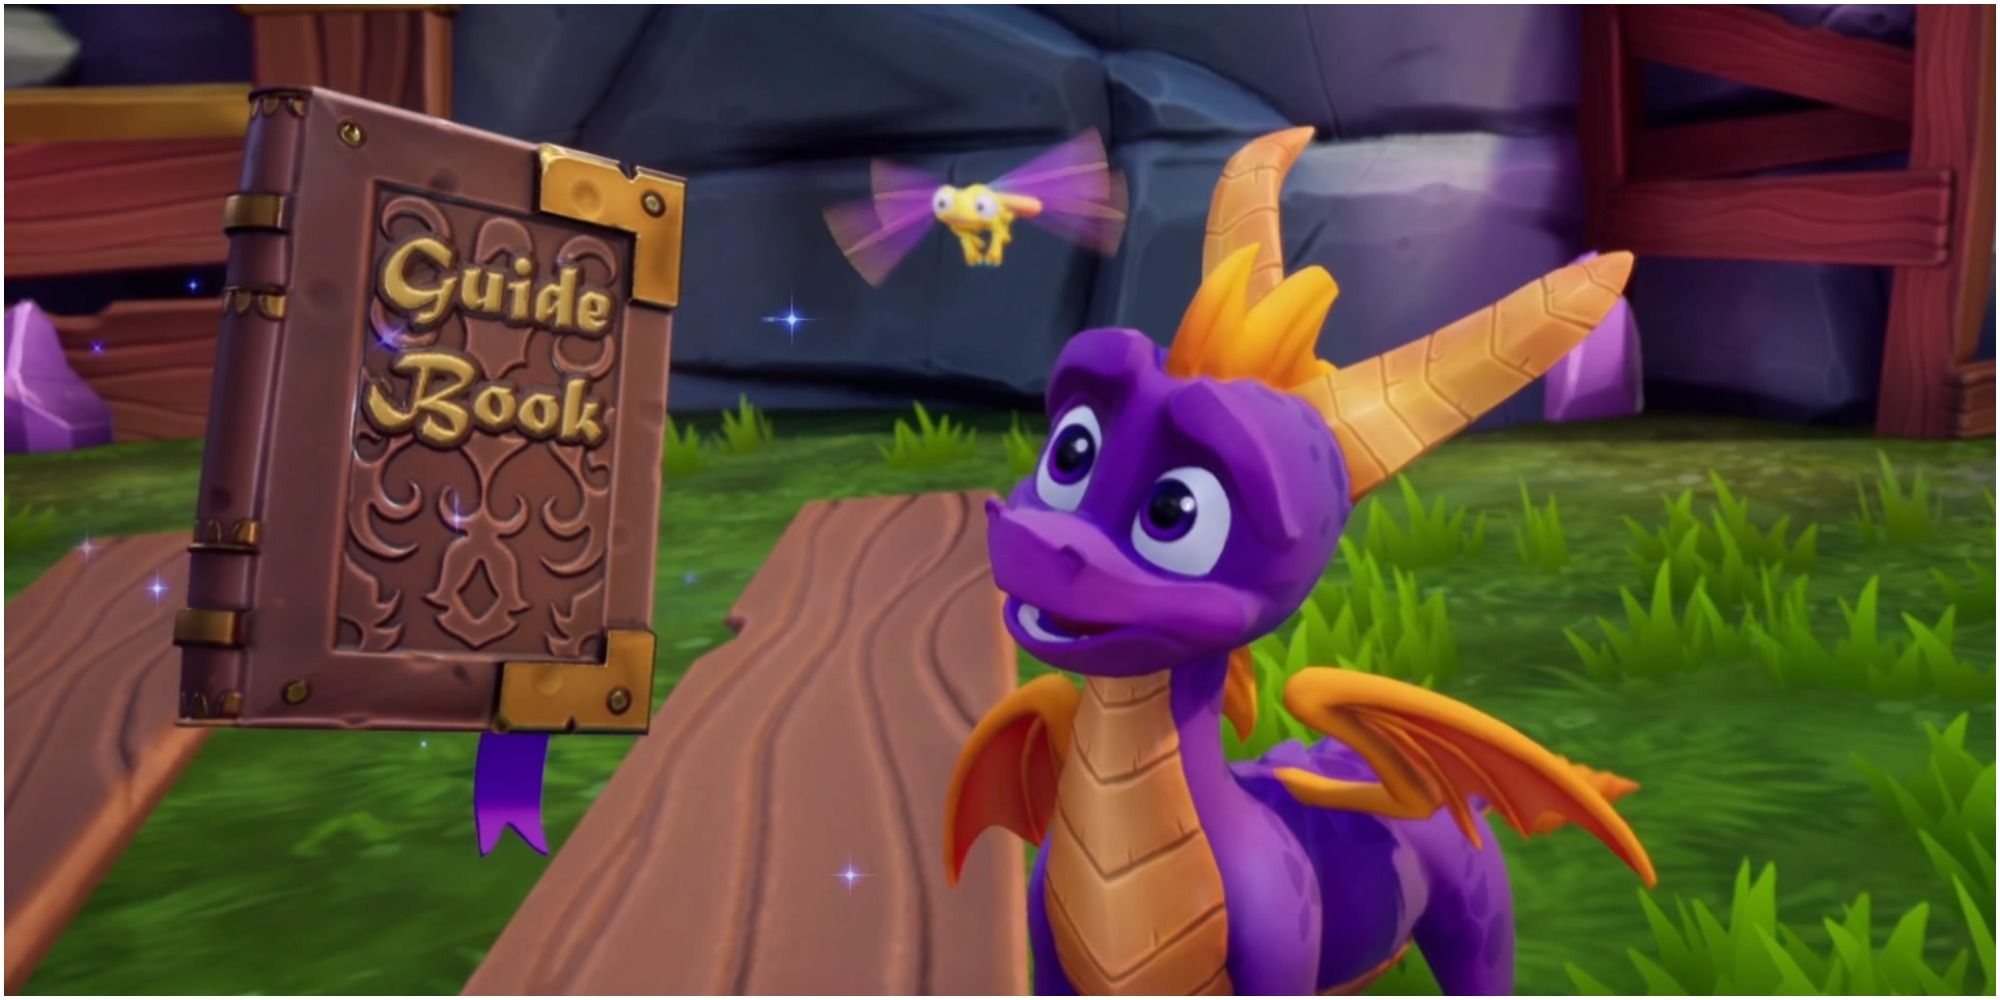 Spyro Re-Ignited Trilogy Ripto's Rage Spyro Guide Book Sparx